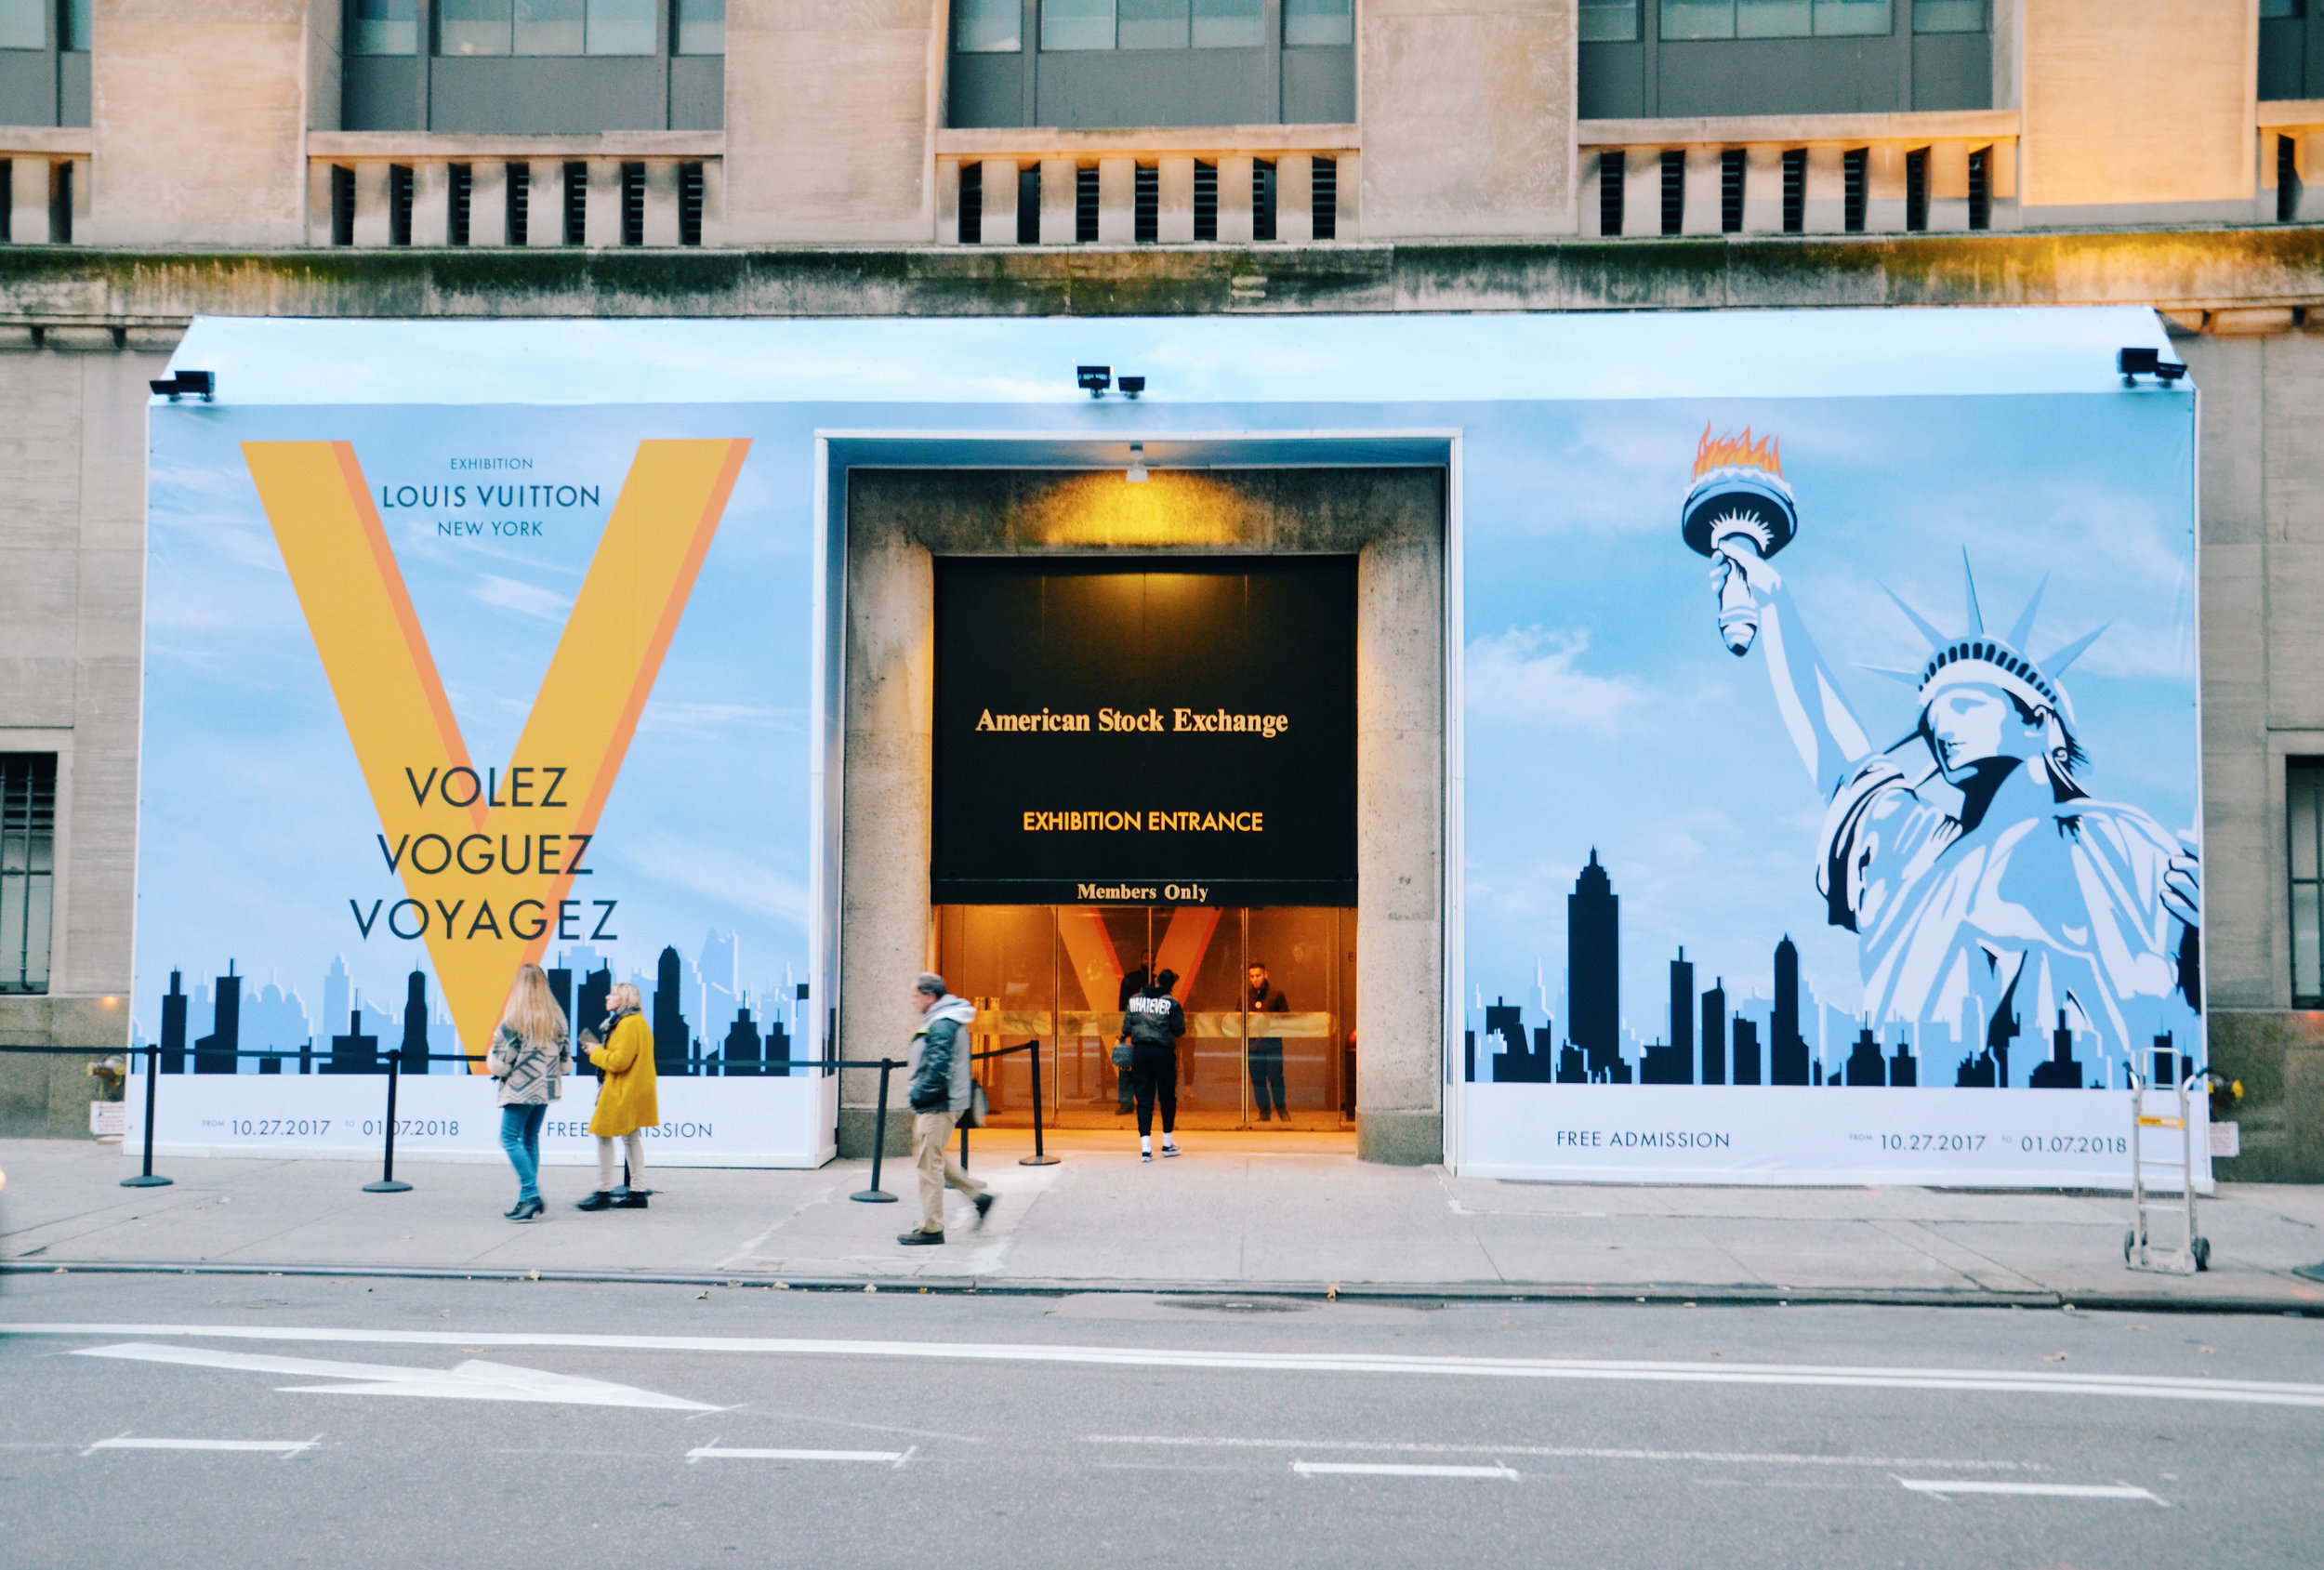 Louis Vuitton's Volez Voguez Voyagez makes it's way to NYC - The Journiest